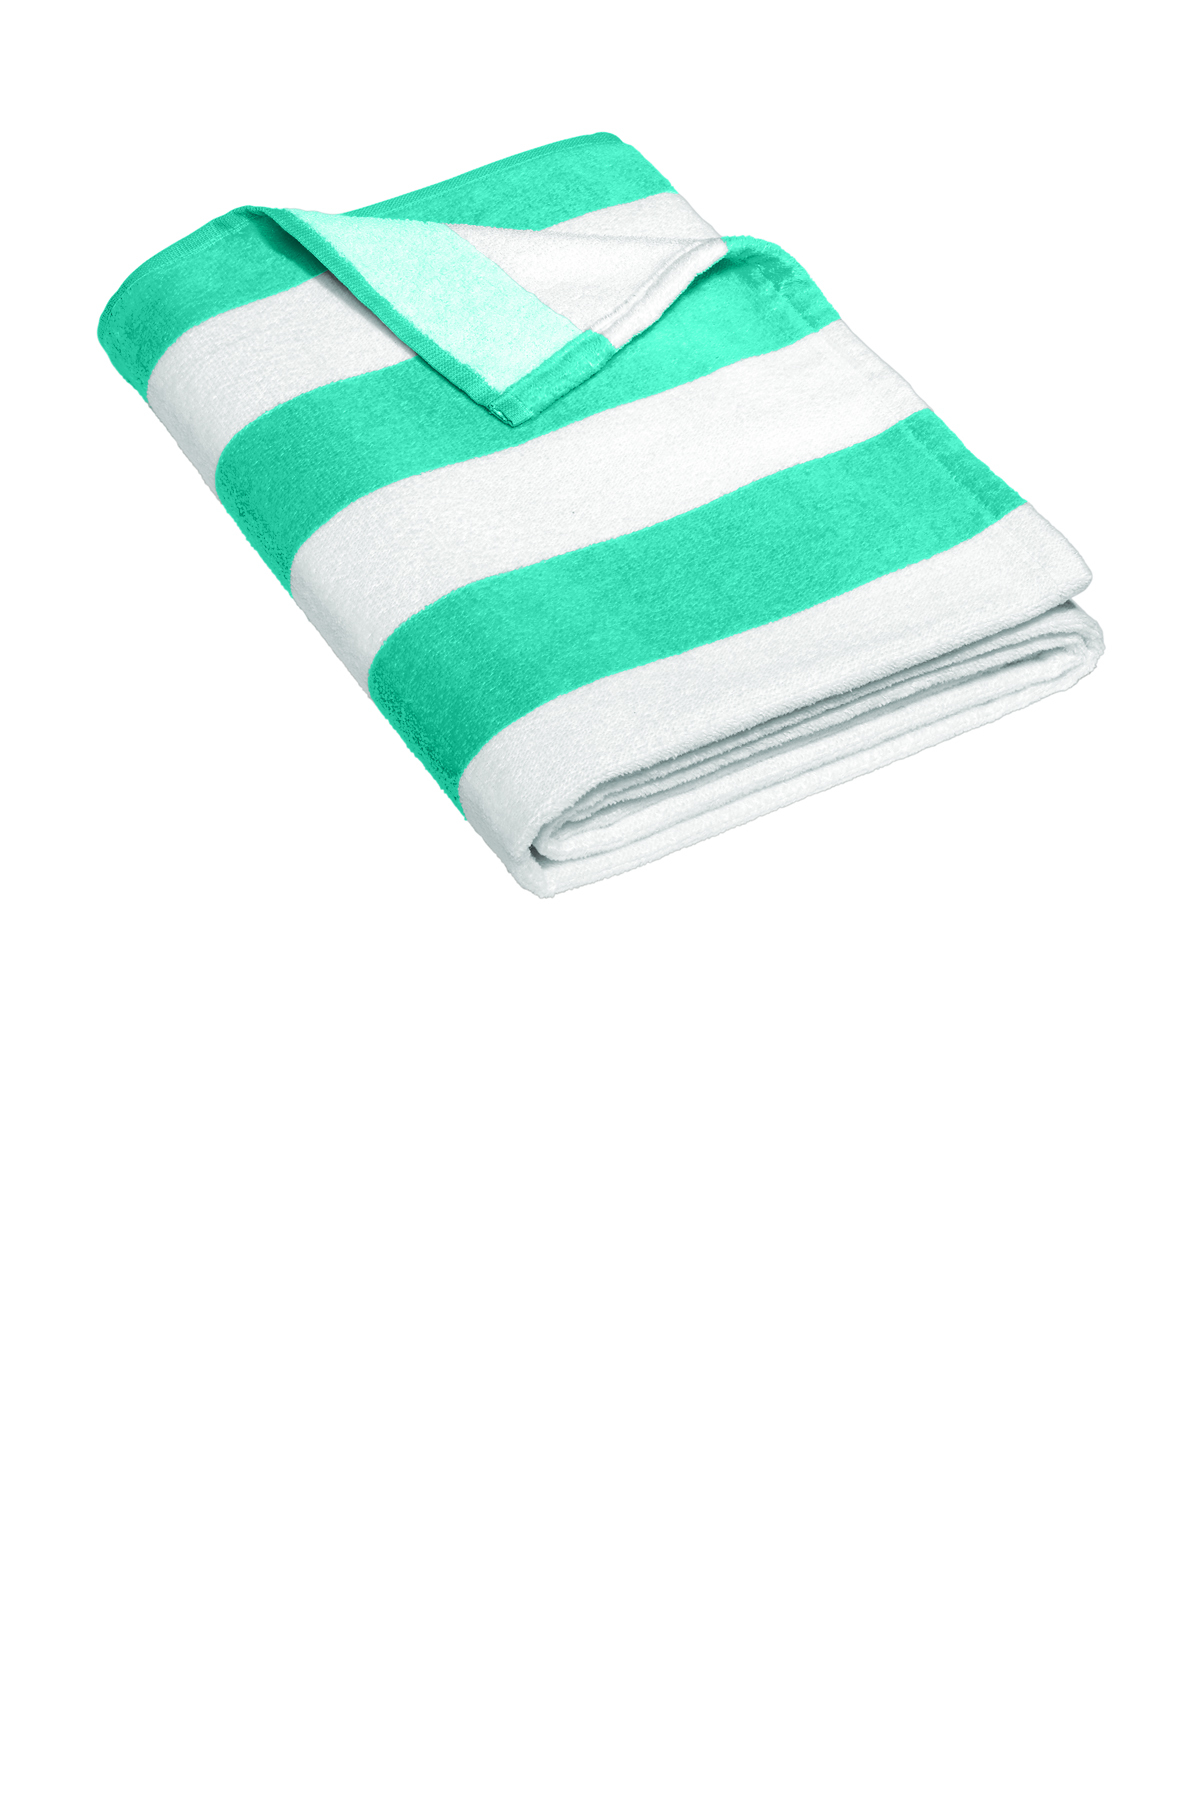 Monarch SC-HTSG-24 Herringbone Tea Towels Grey Stripe, 12Pk